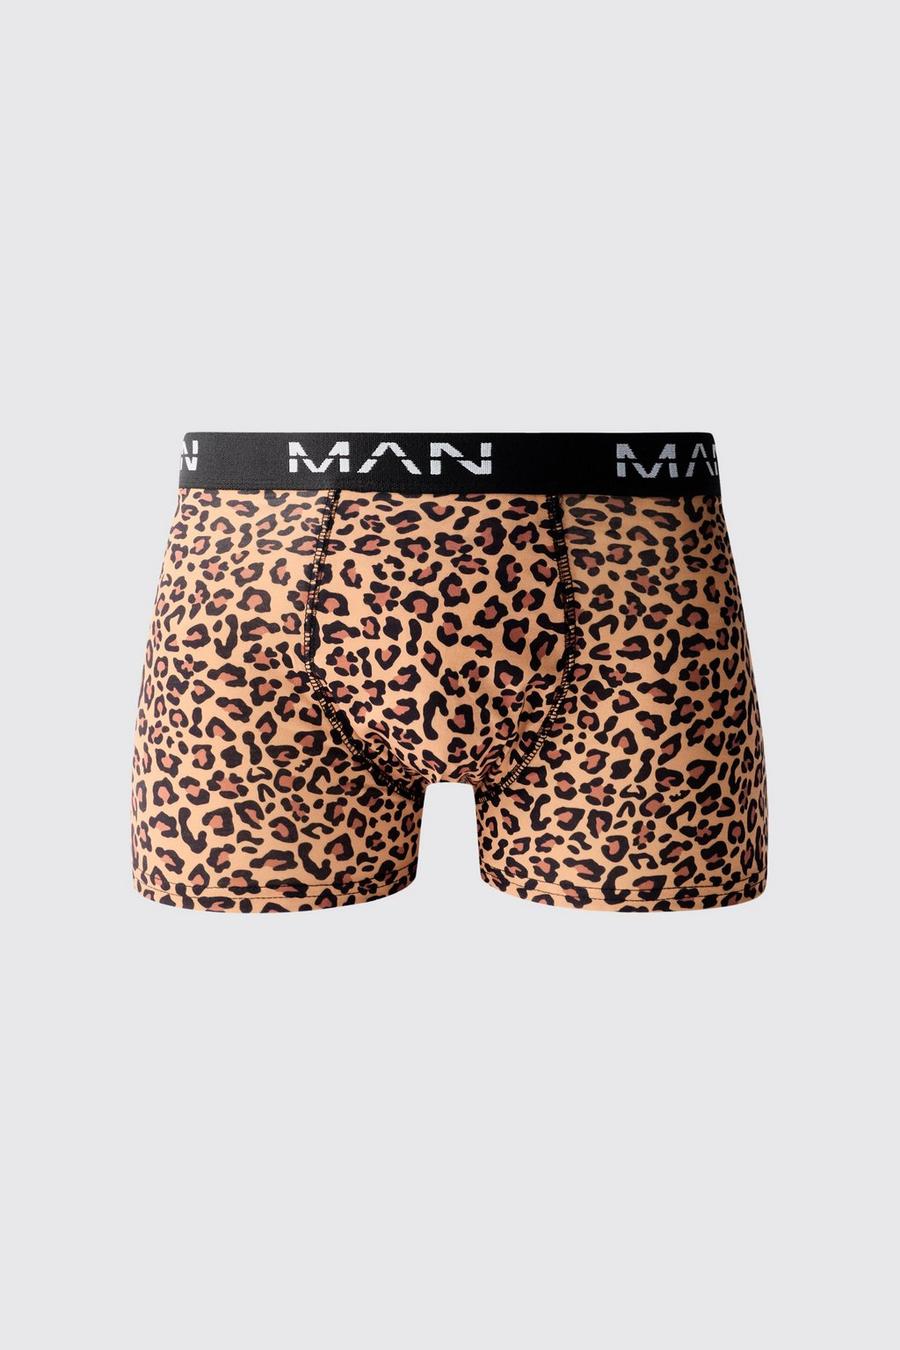 Multi Man Leopard Printed Boxers